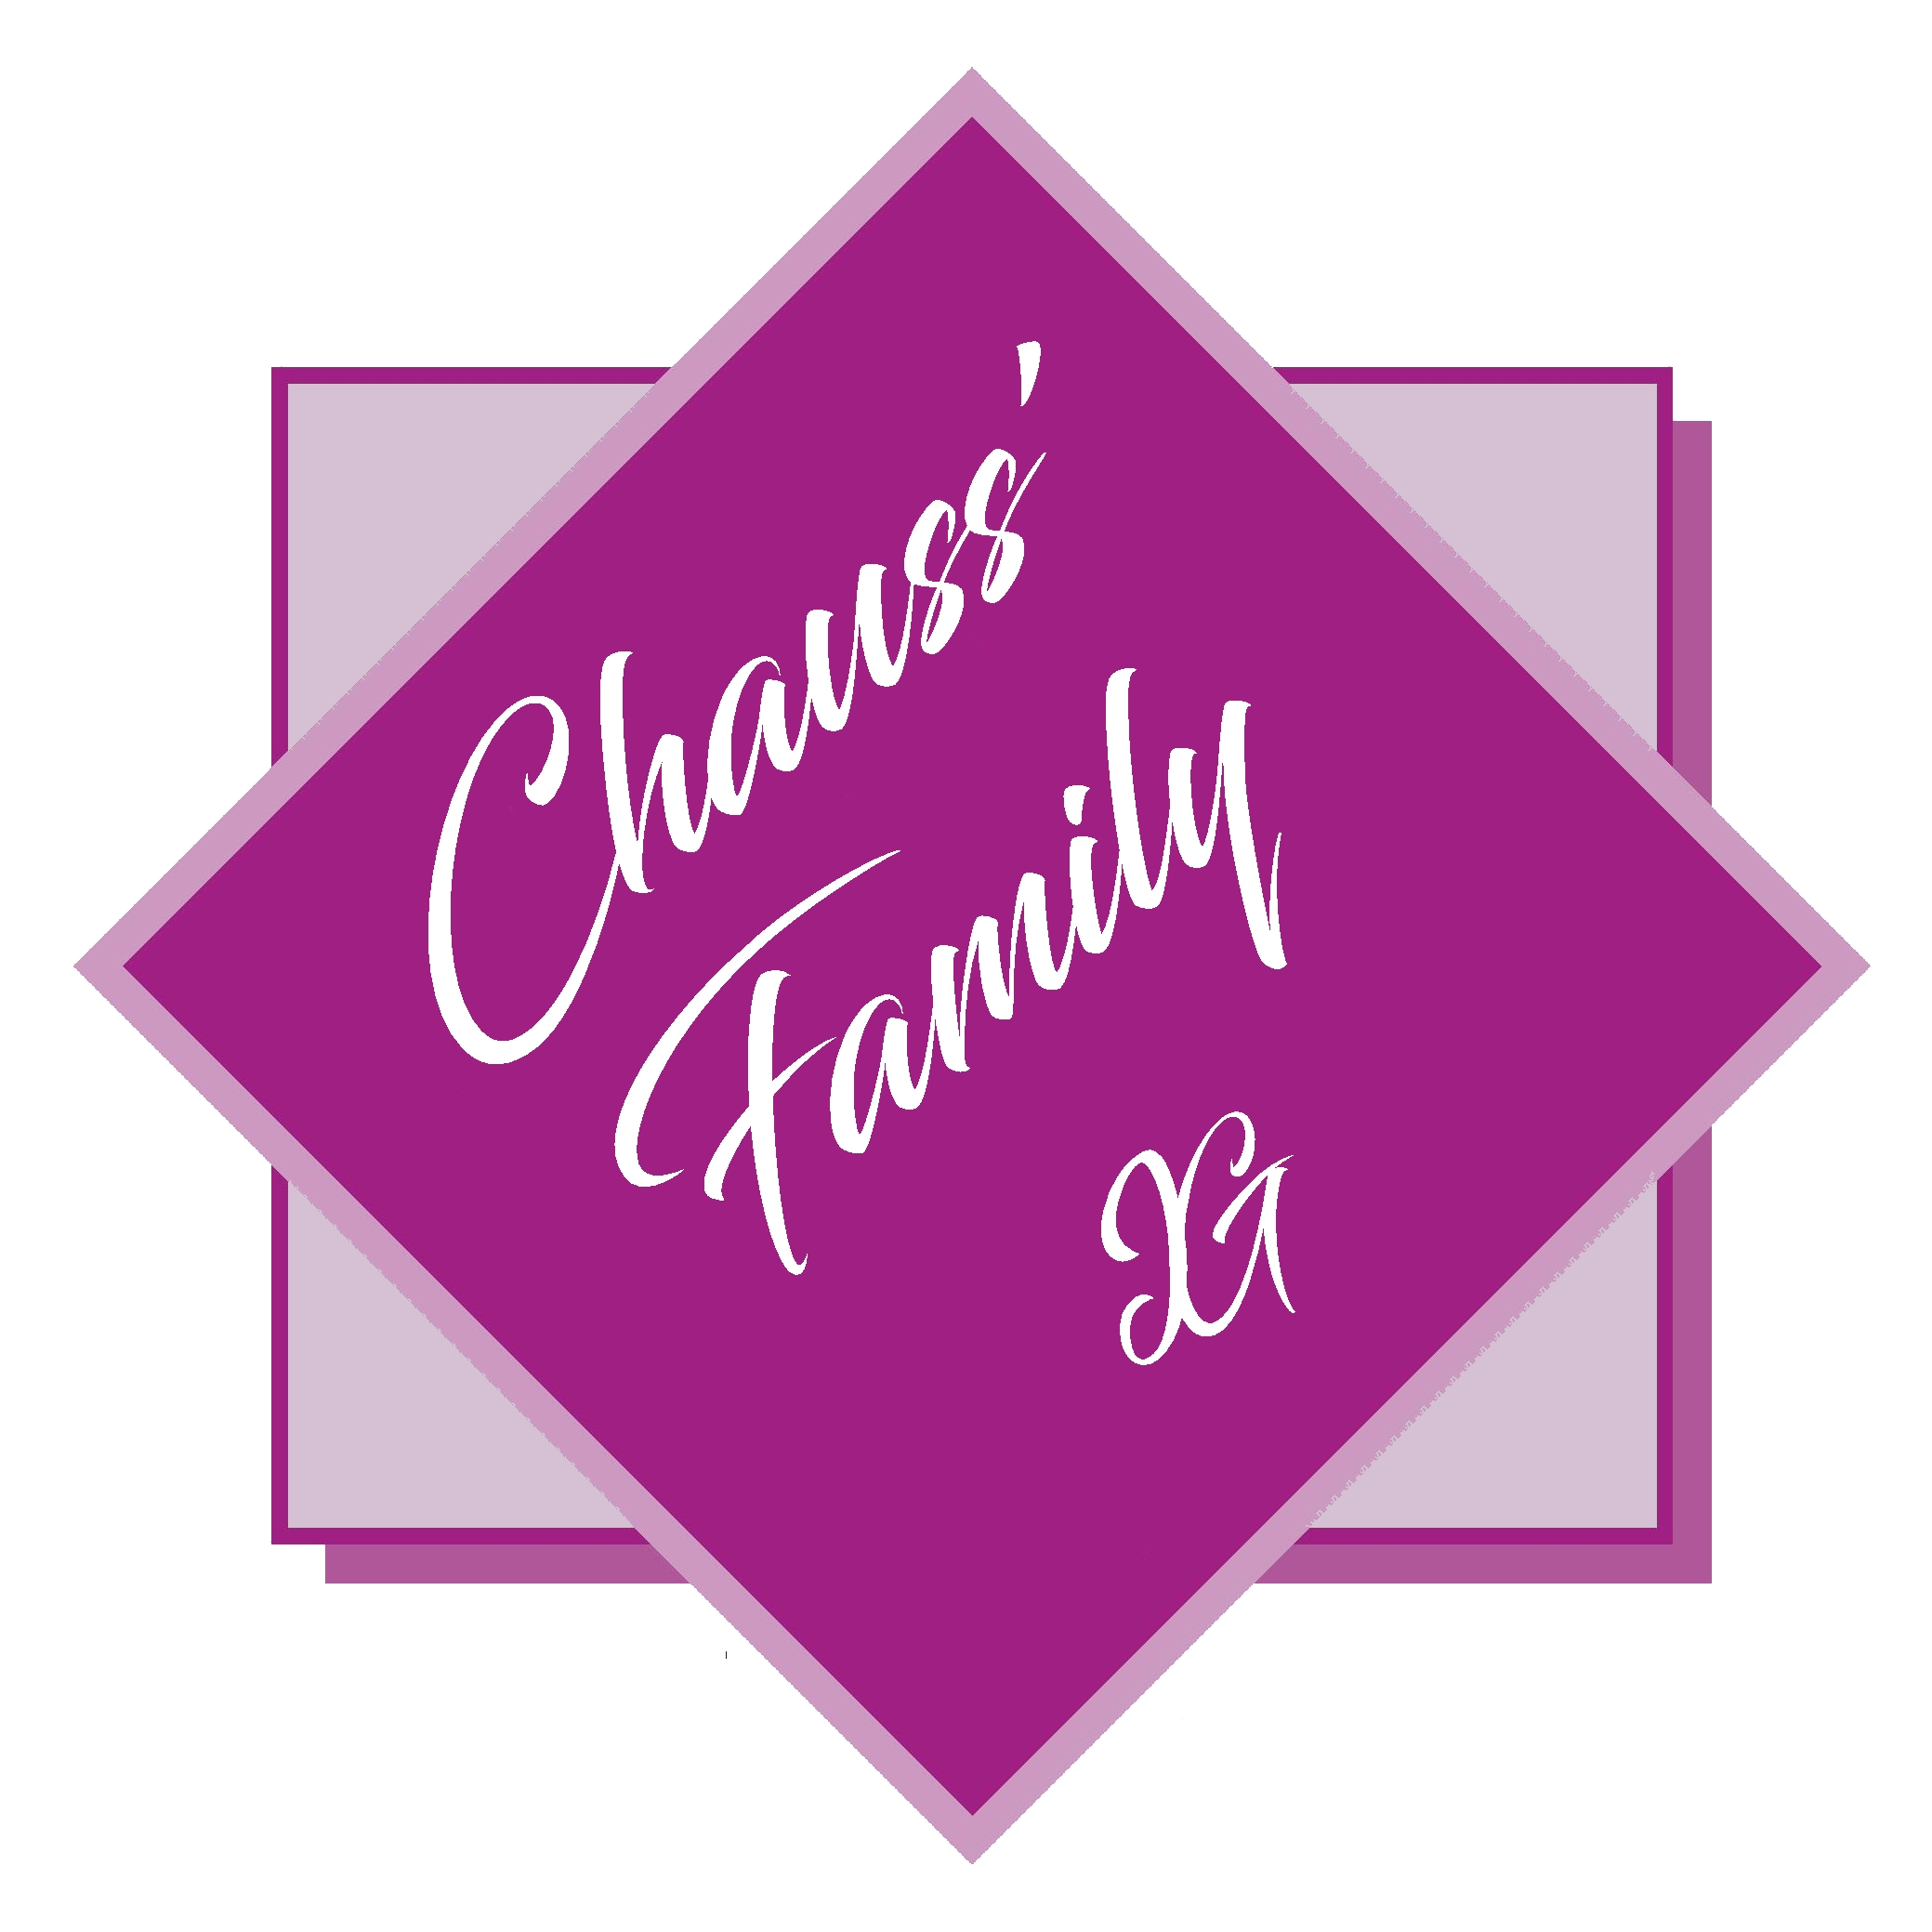 Chauss Family